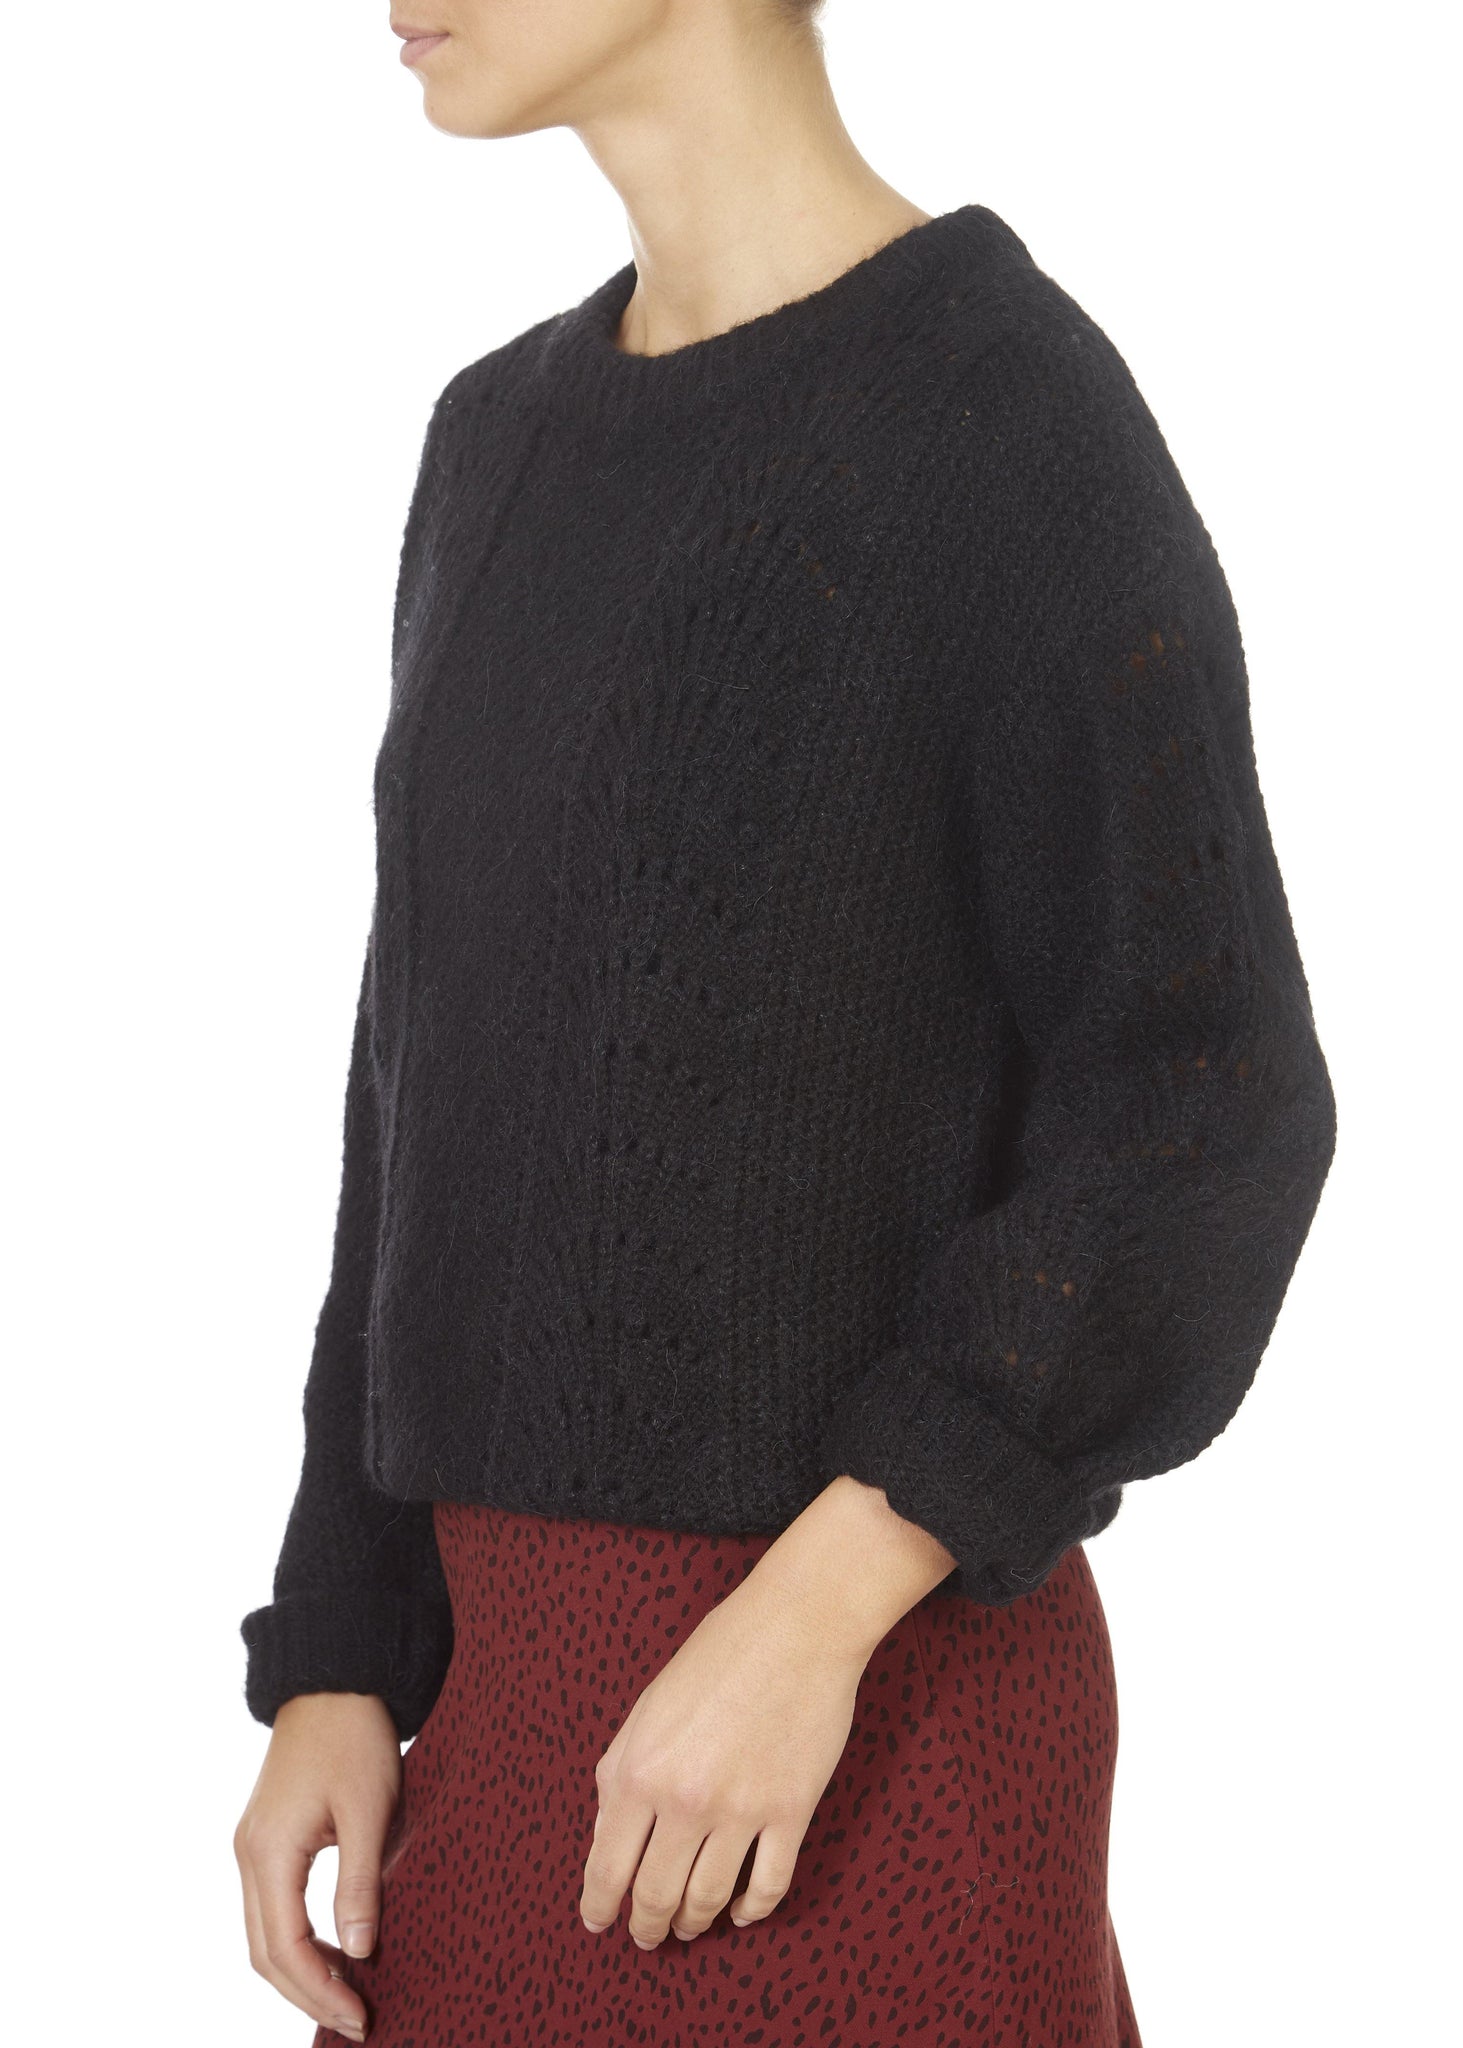 'Mara' Knitted Black Jumper - Jessimara